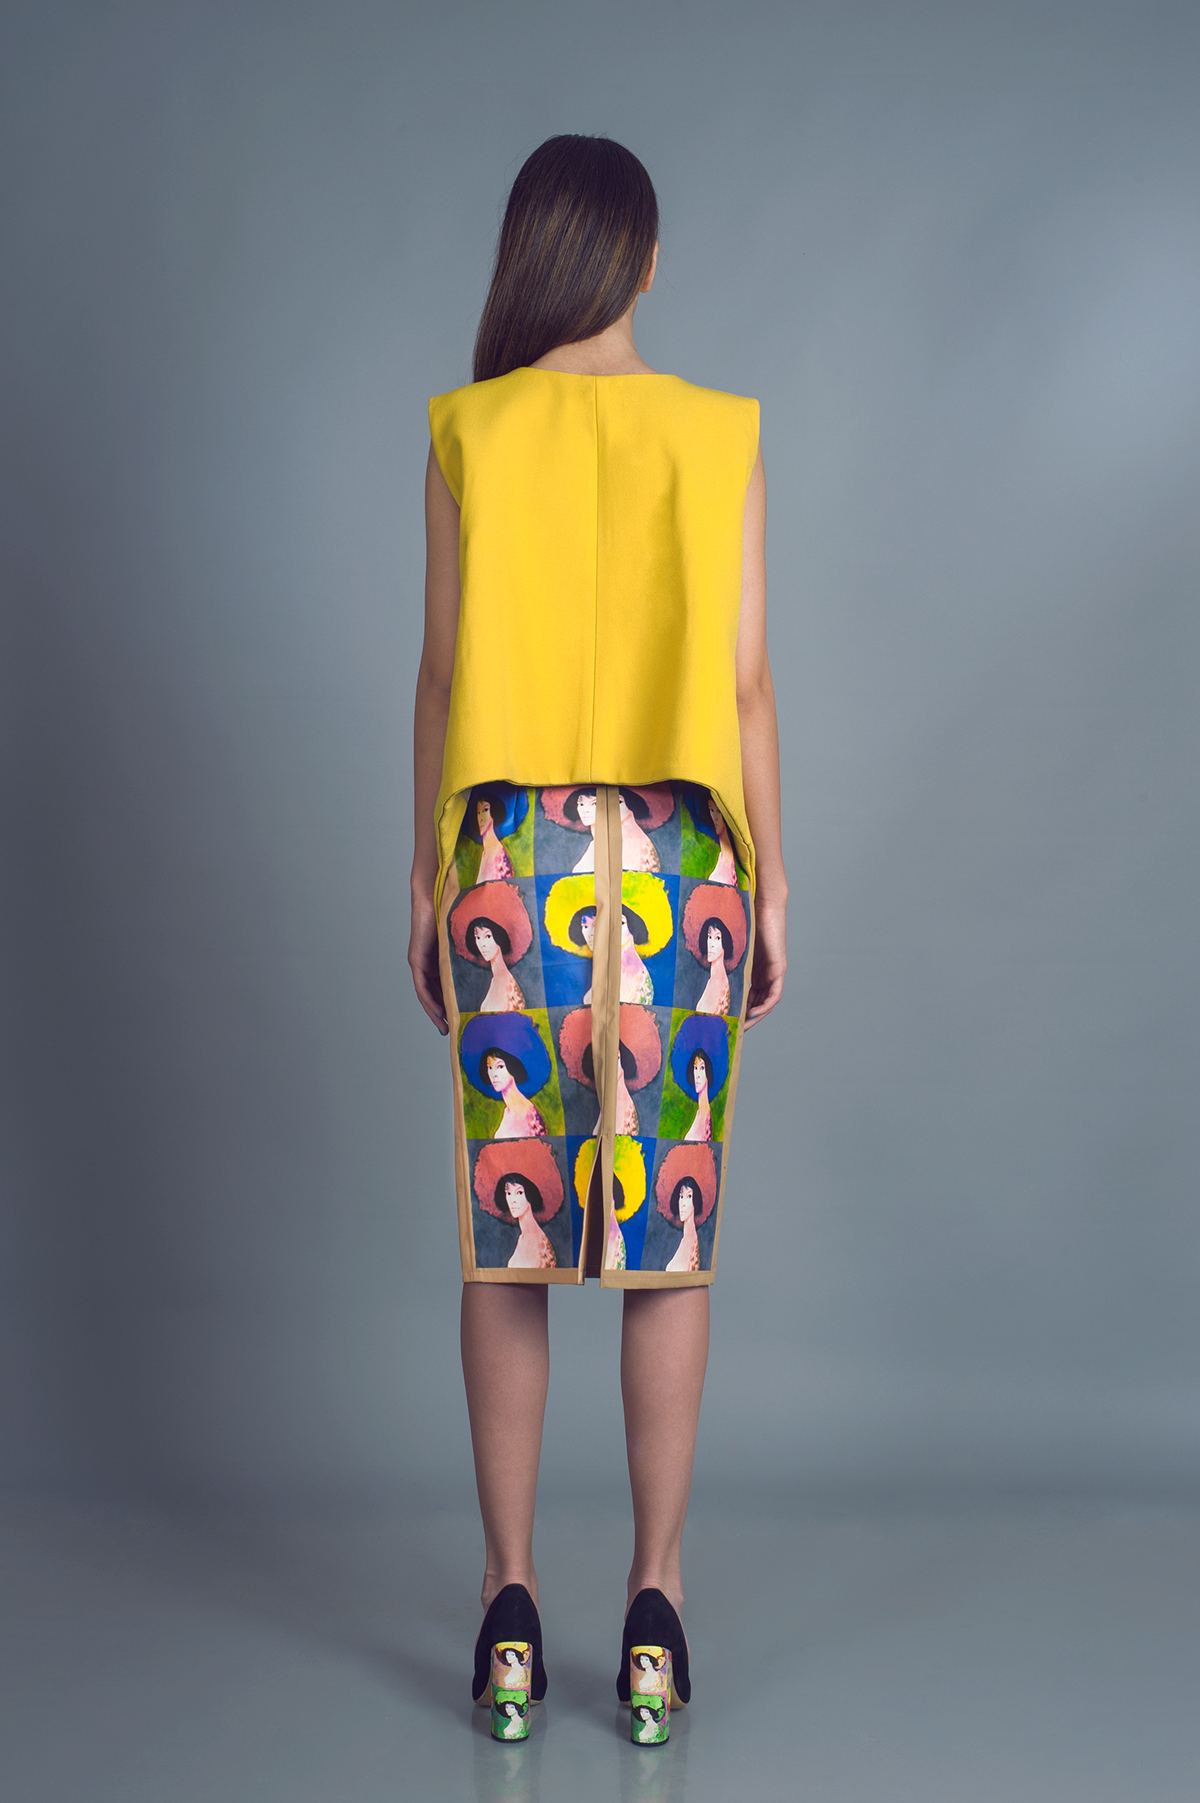 mariam gvasalia  Ana Margiani  Anano dolaberidze  elene kopaleishvili  fashion  design  studio  colours